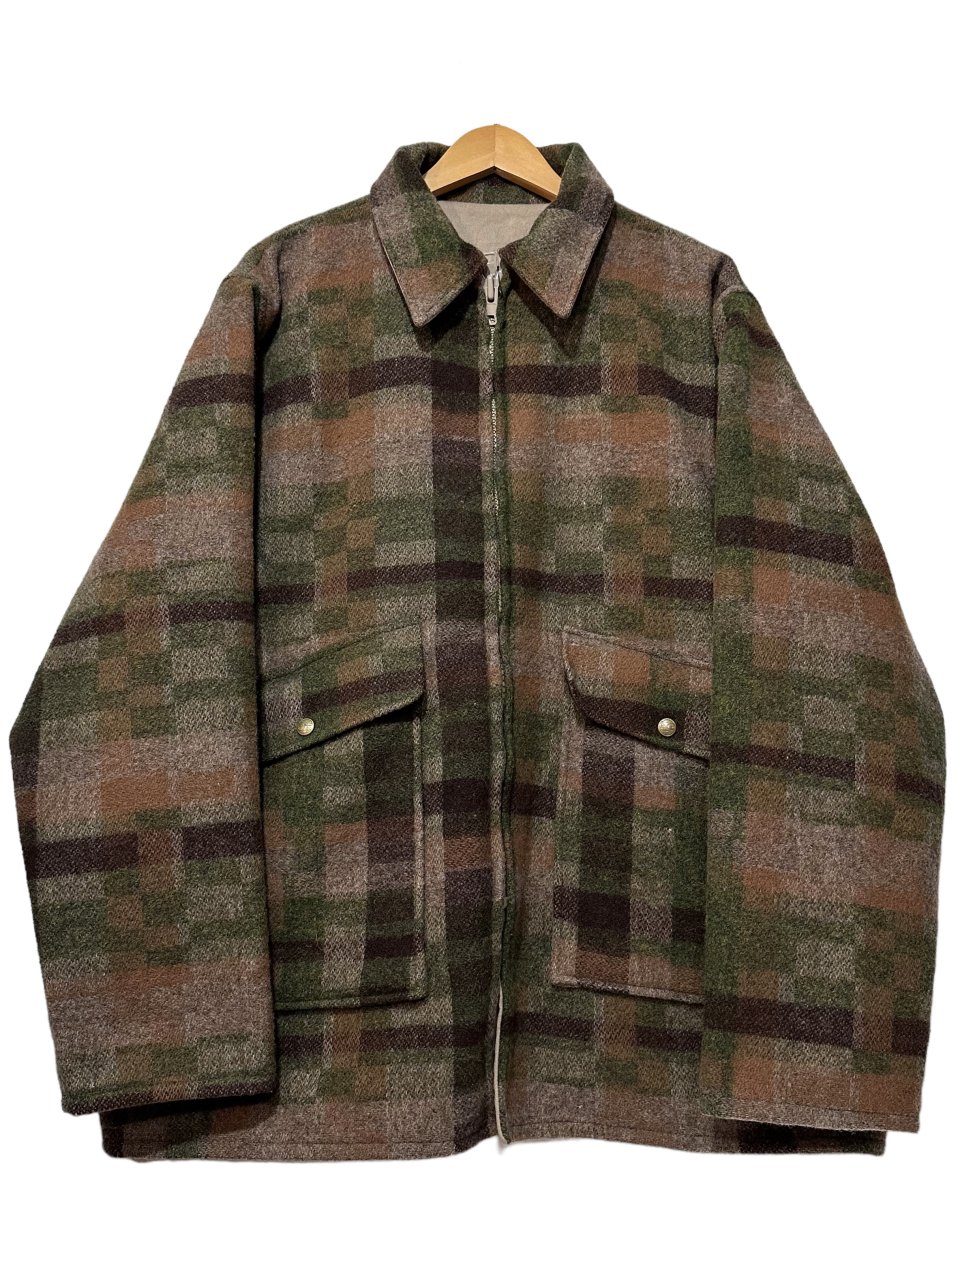 USA製 80s L.L.Bean Reversible Wool Hunting Jacket オリーブ カーキ ...